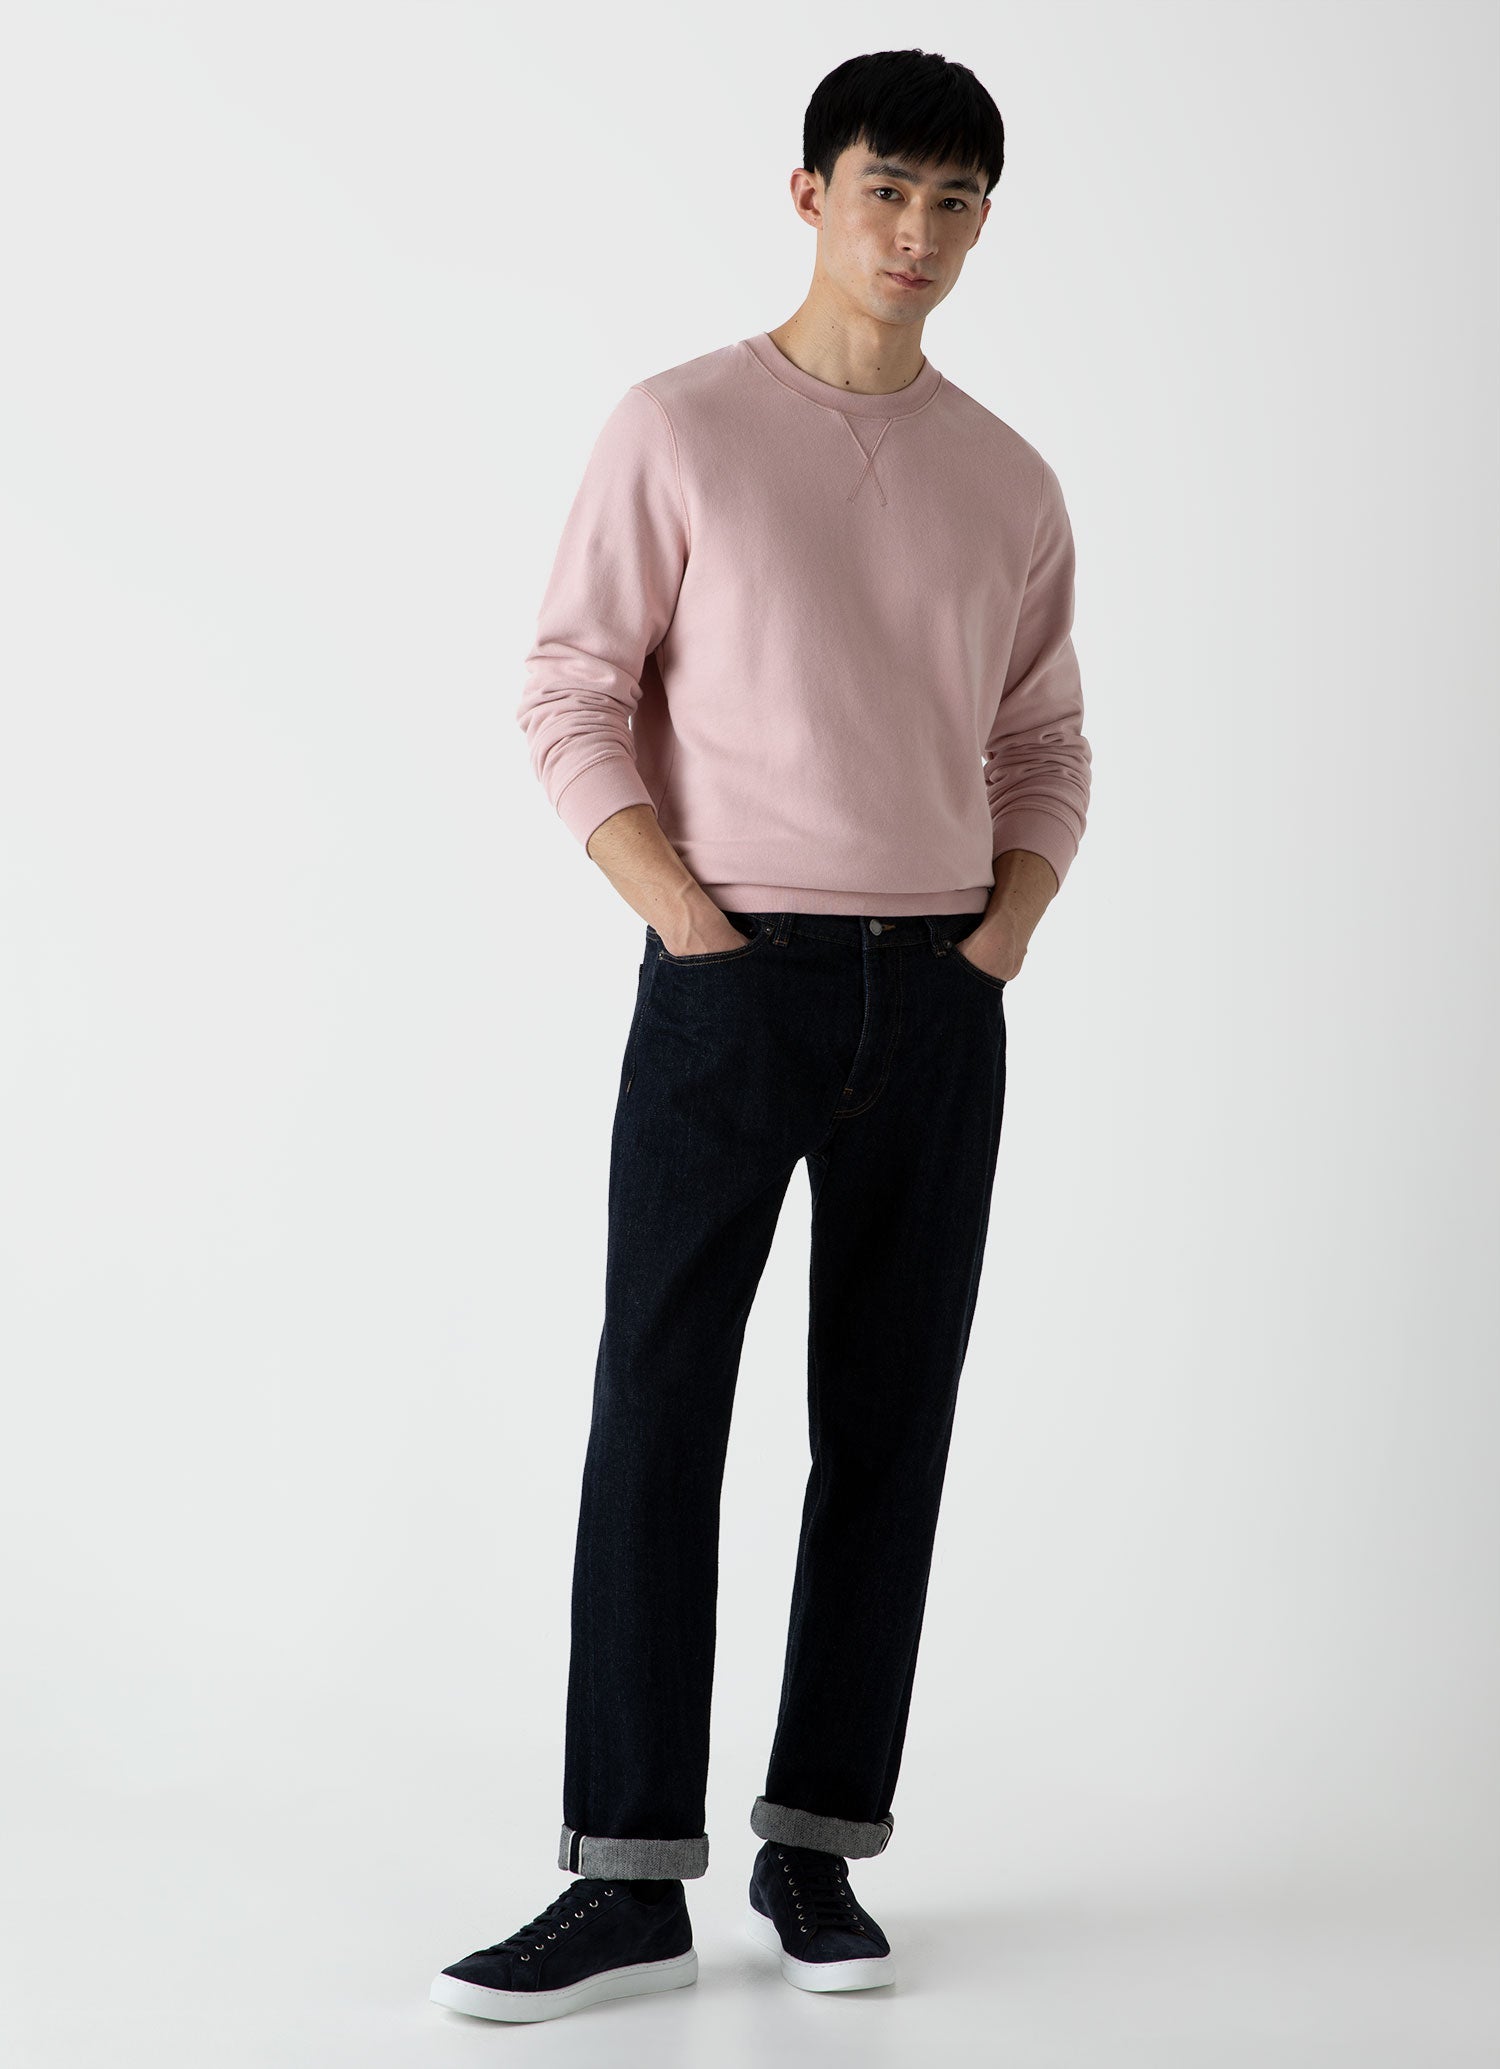 Men's Loopback Sweatshirt in Shell Pink